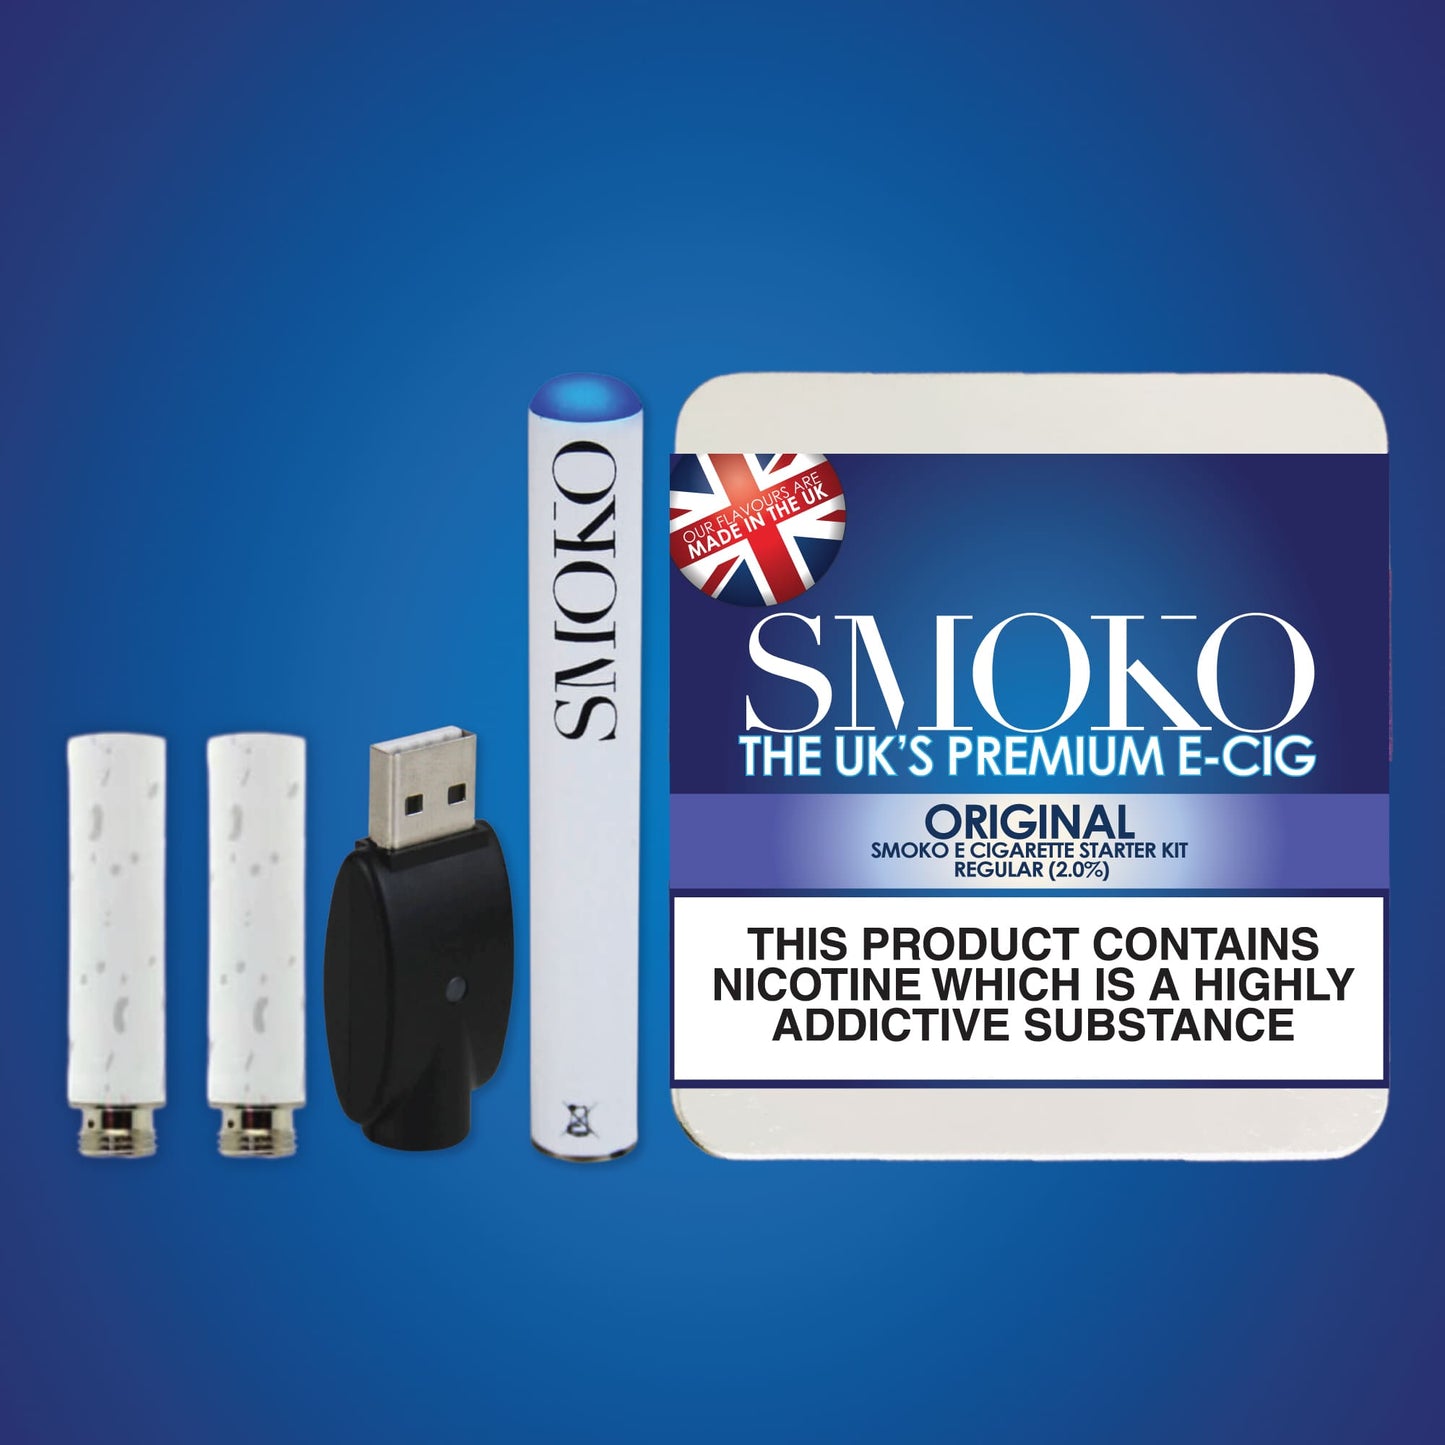 Das beste Starter-Kit für E-Zigaretten (Cigalike) im Vereinigten Königreich. E-Zigaretten-Starter-Kit SMOKO ORIGINAL Tabakgeschmack